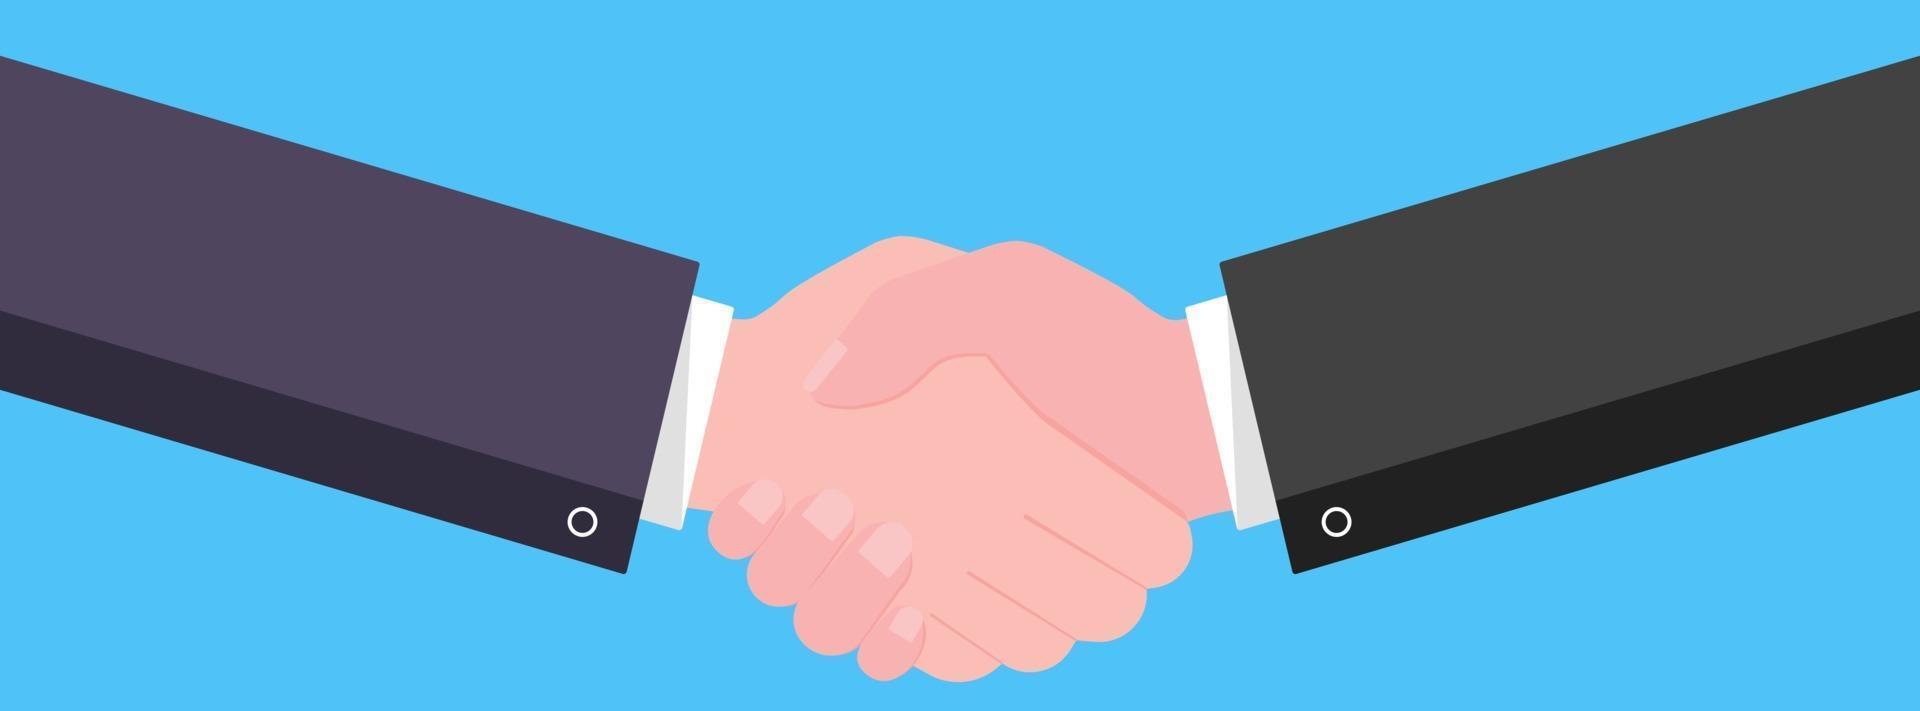 Businessmen shaking hands flat style design vector illustration Success deal partnership greeting handshaking agreement isolated on light blue background